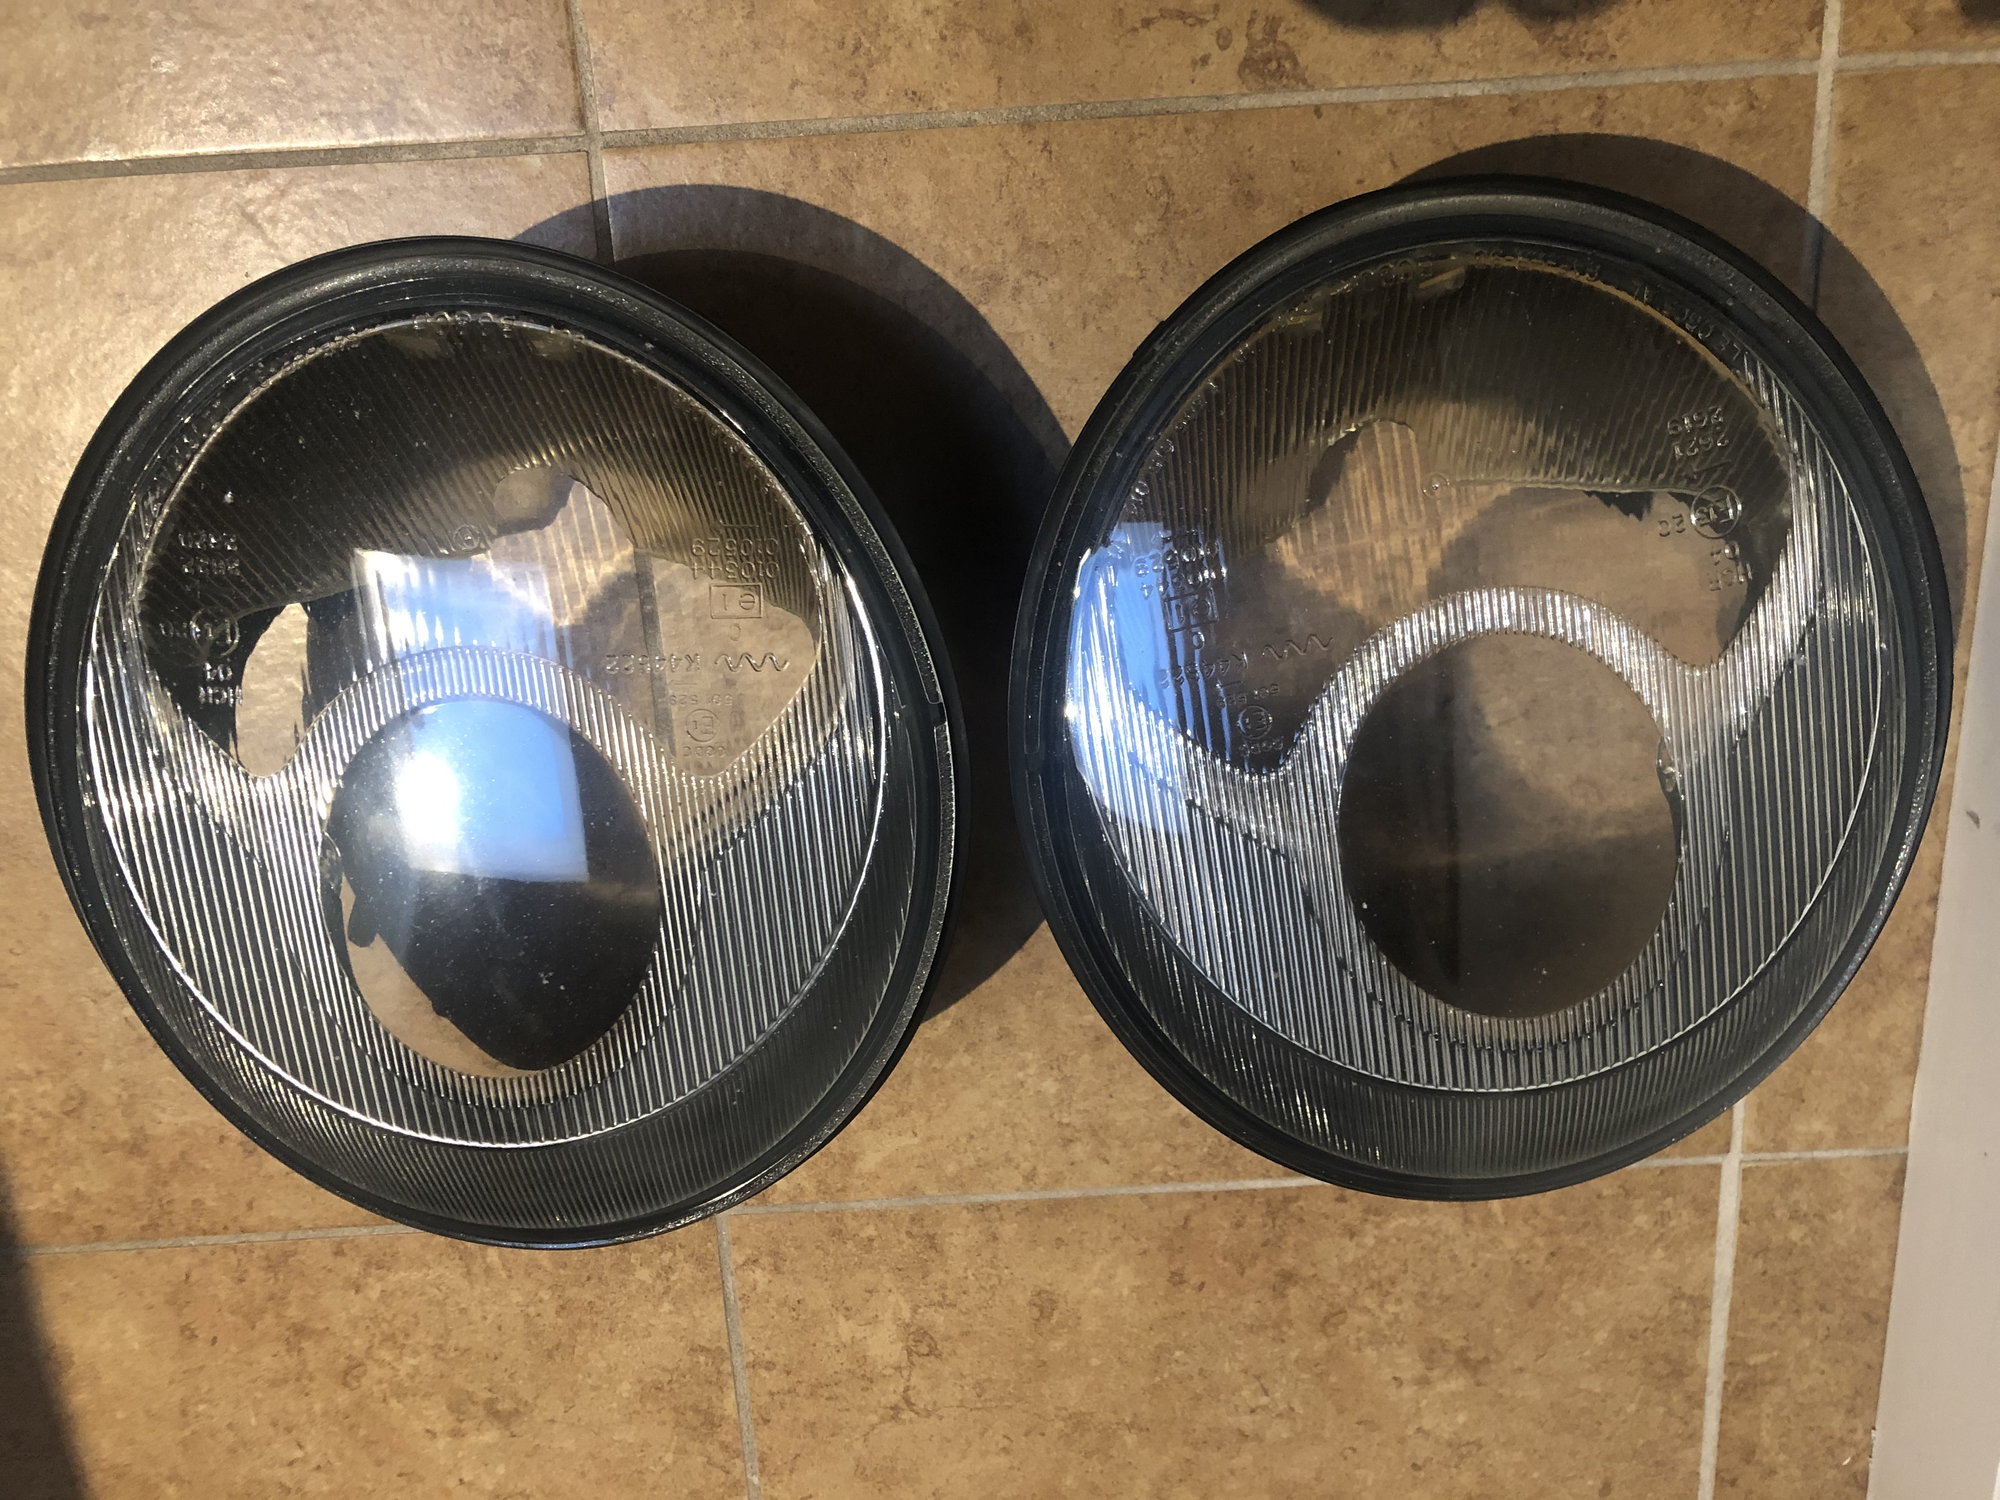 Lights - Porsche 993 headlight lenses - Used - 1994 to 1998 Porsche 911 - Los Gatos, CA 95032, United States